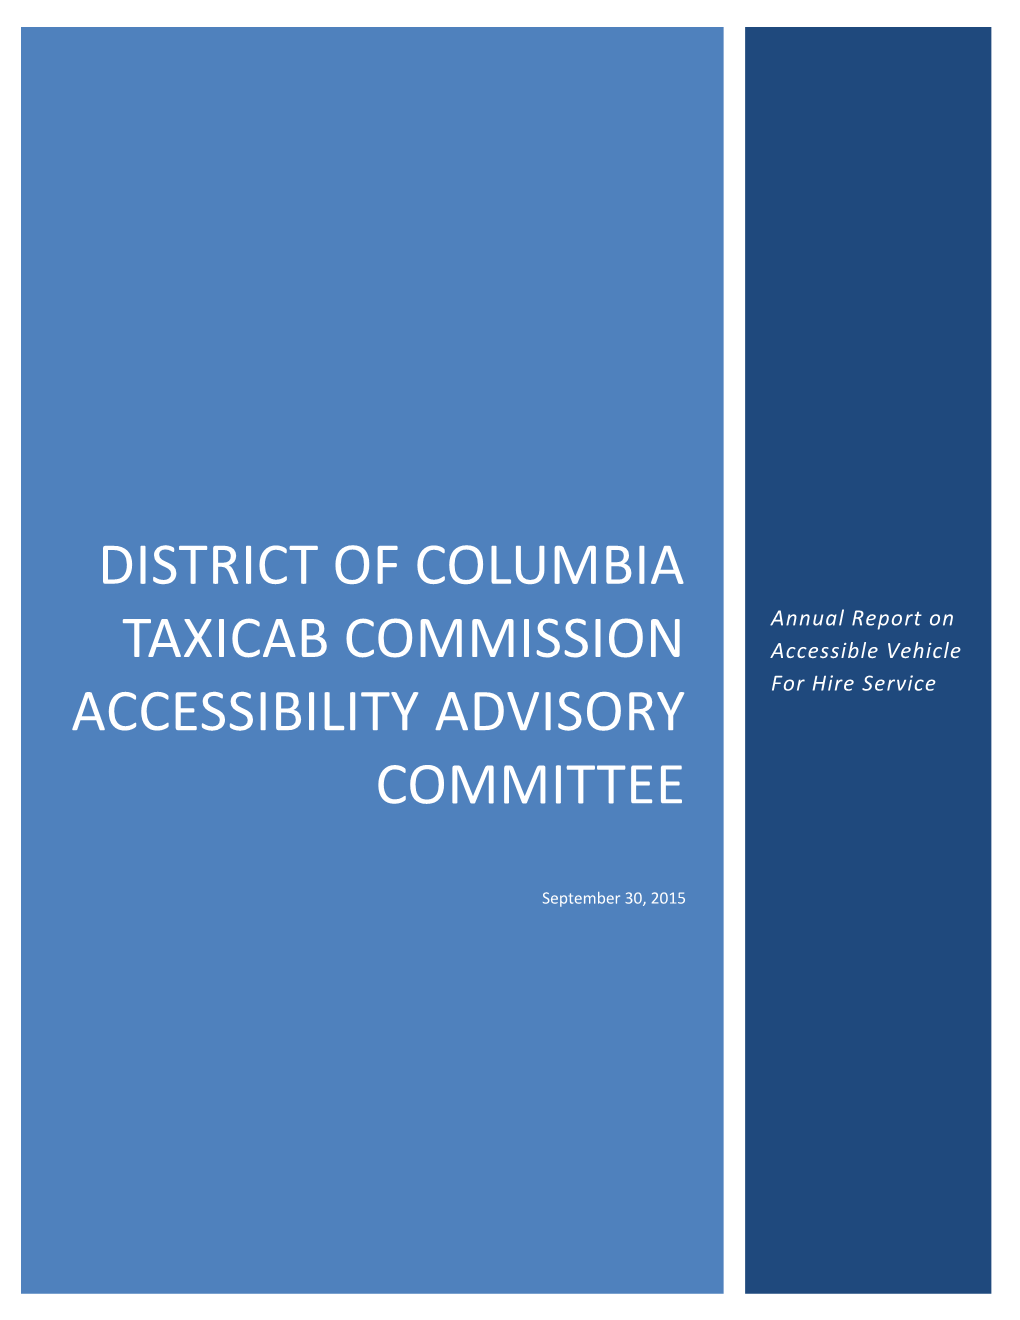 2015 DCTC Accessibility Advisory